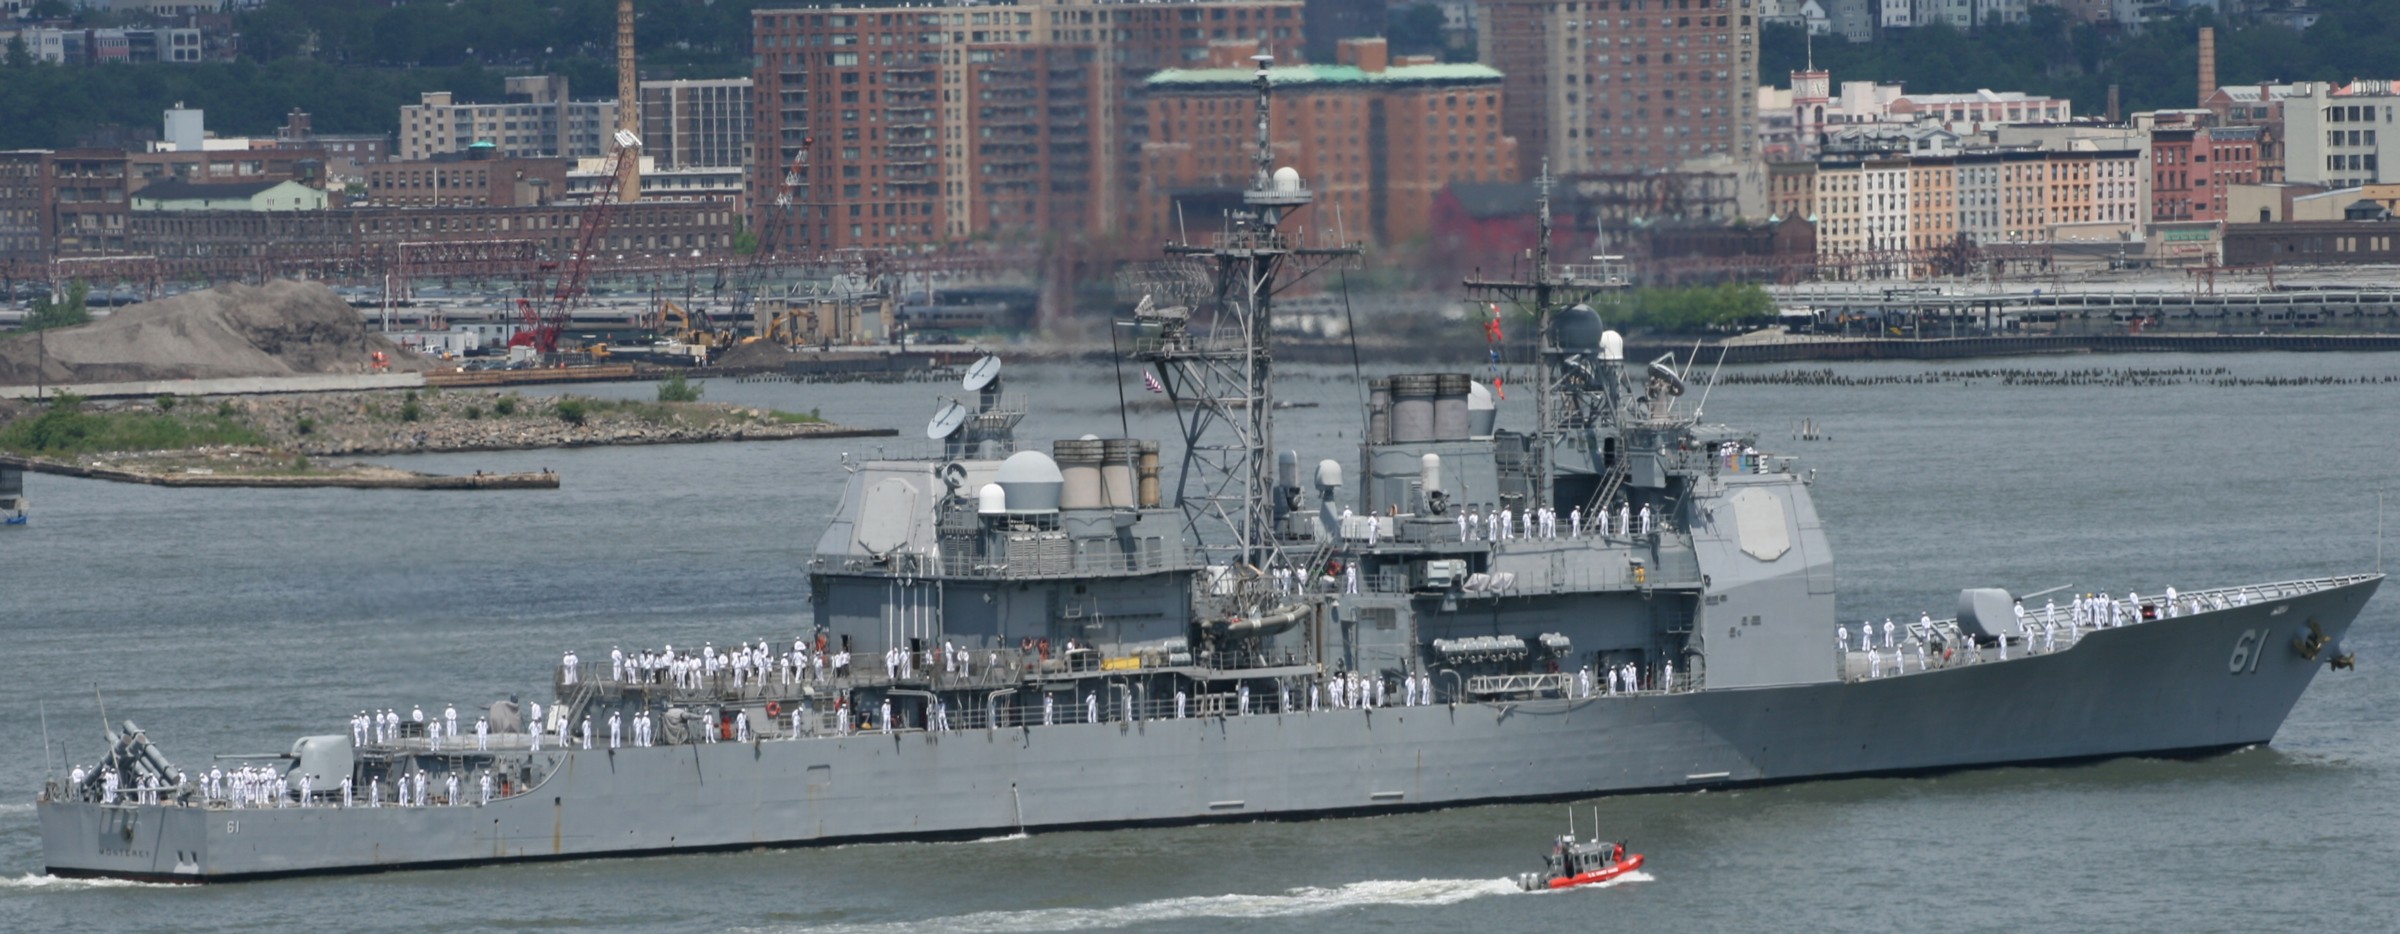 cg-61 uss monterey ticonderoga class guided missile cruiser aegis us navy fleet week new york 25